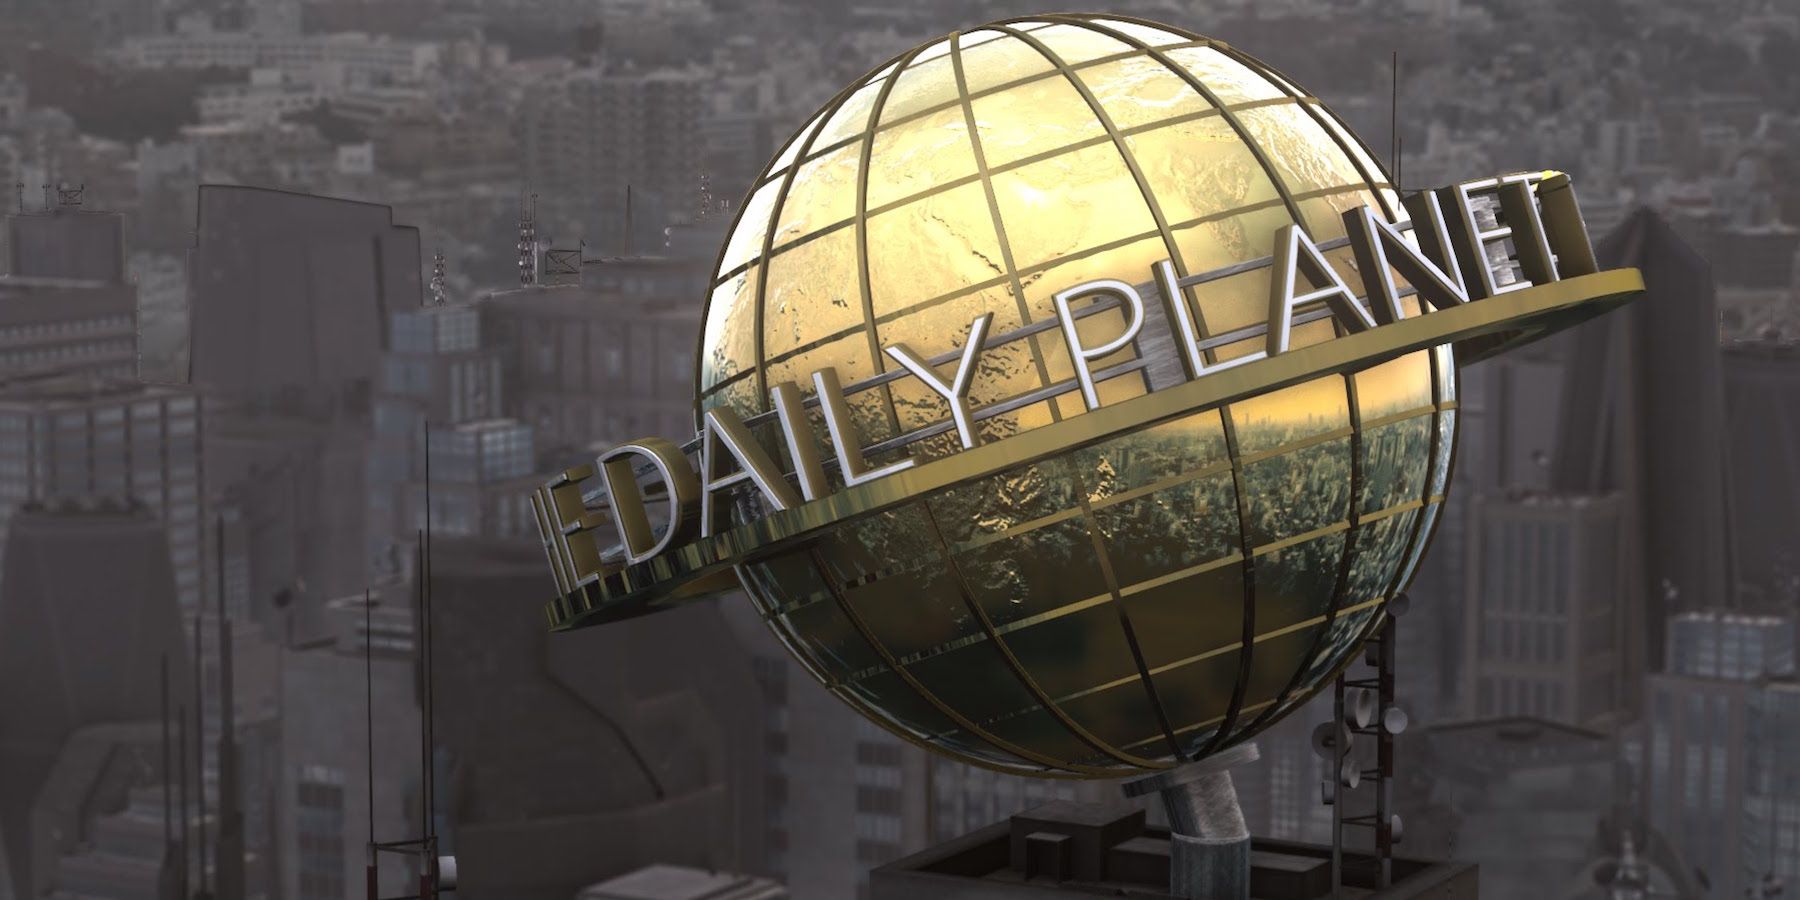 Daily Planet in Metropolis